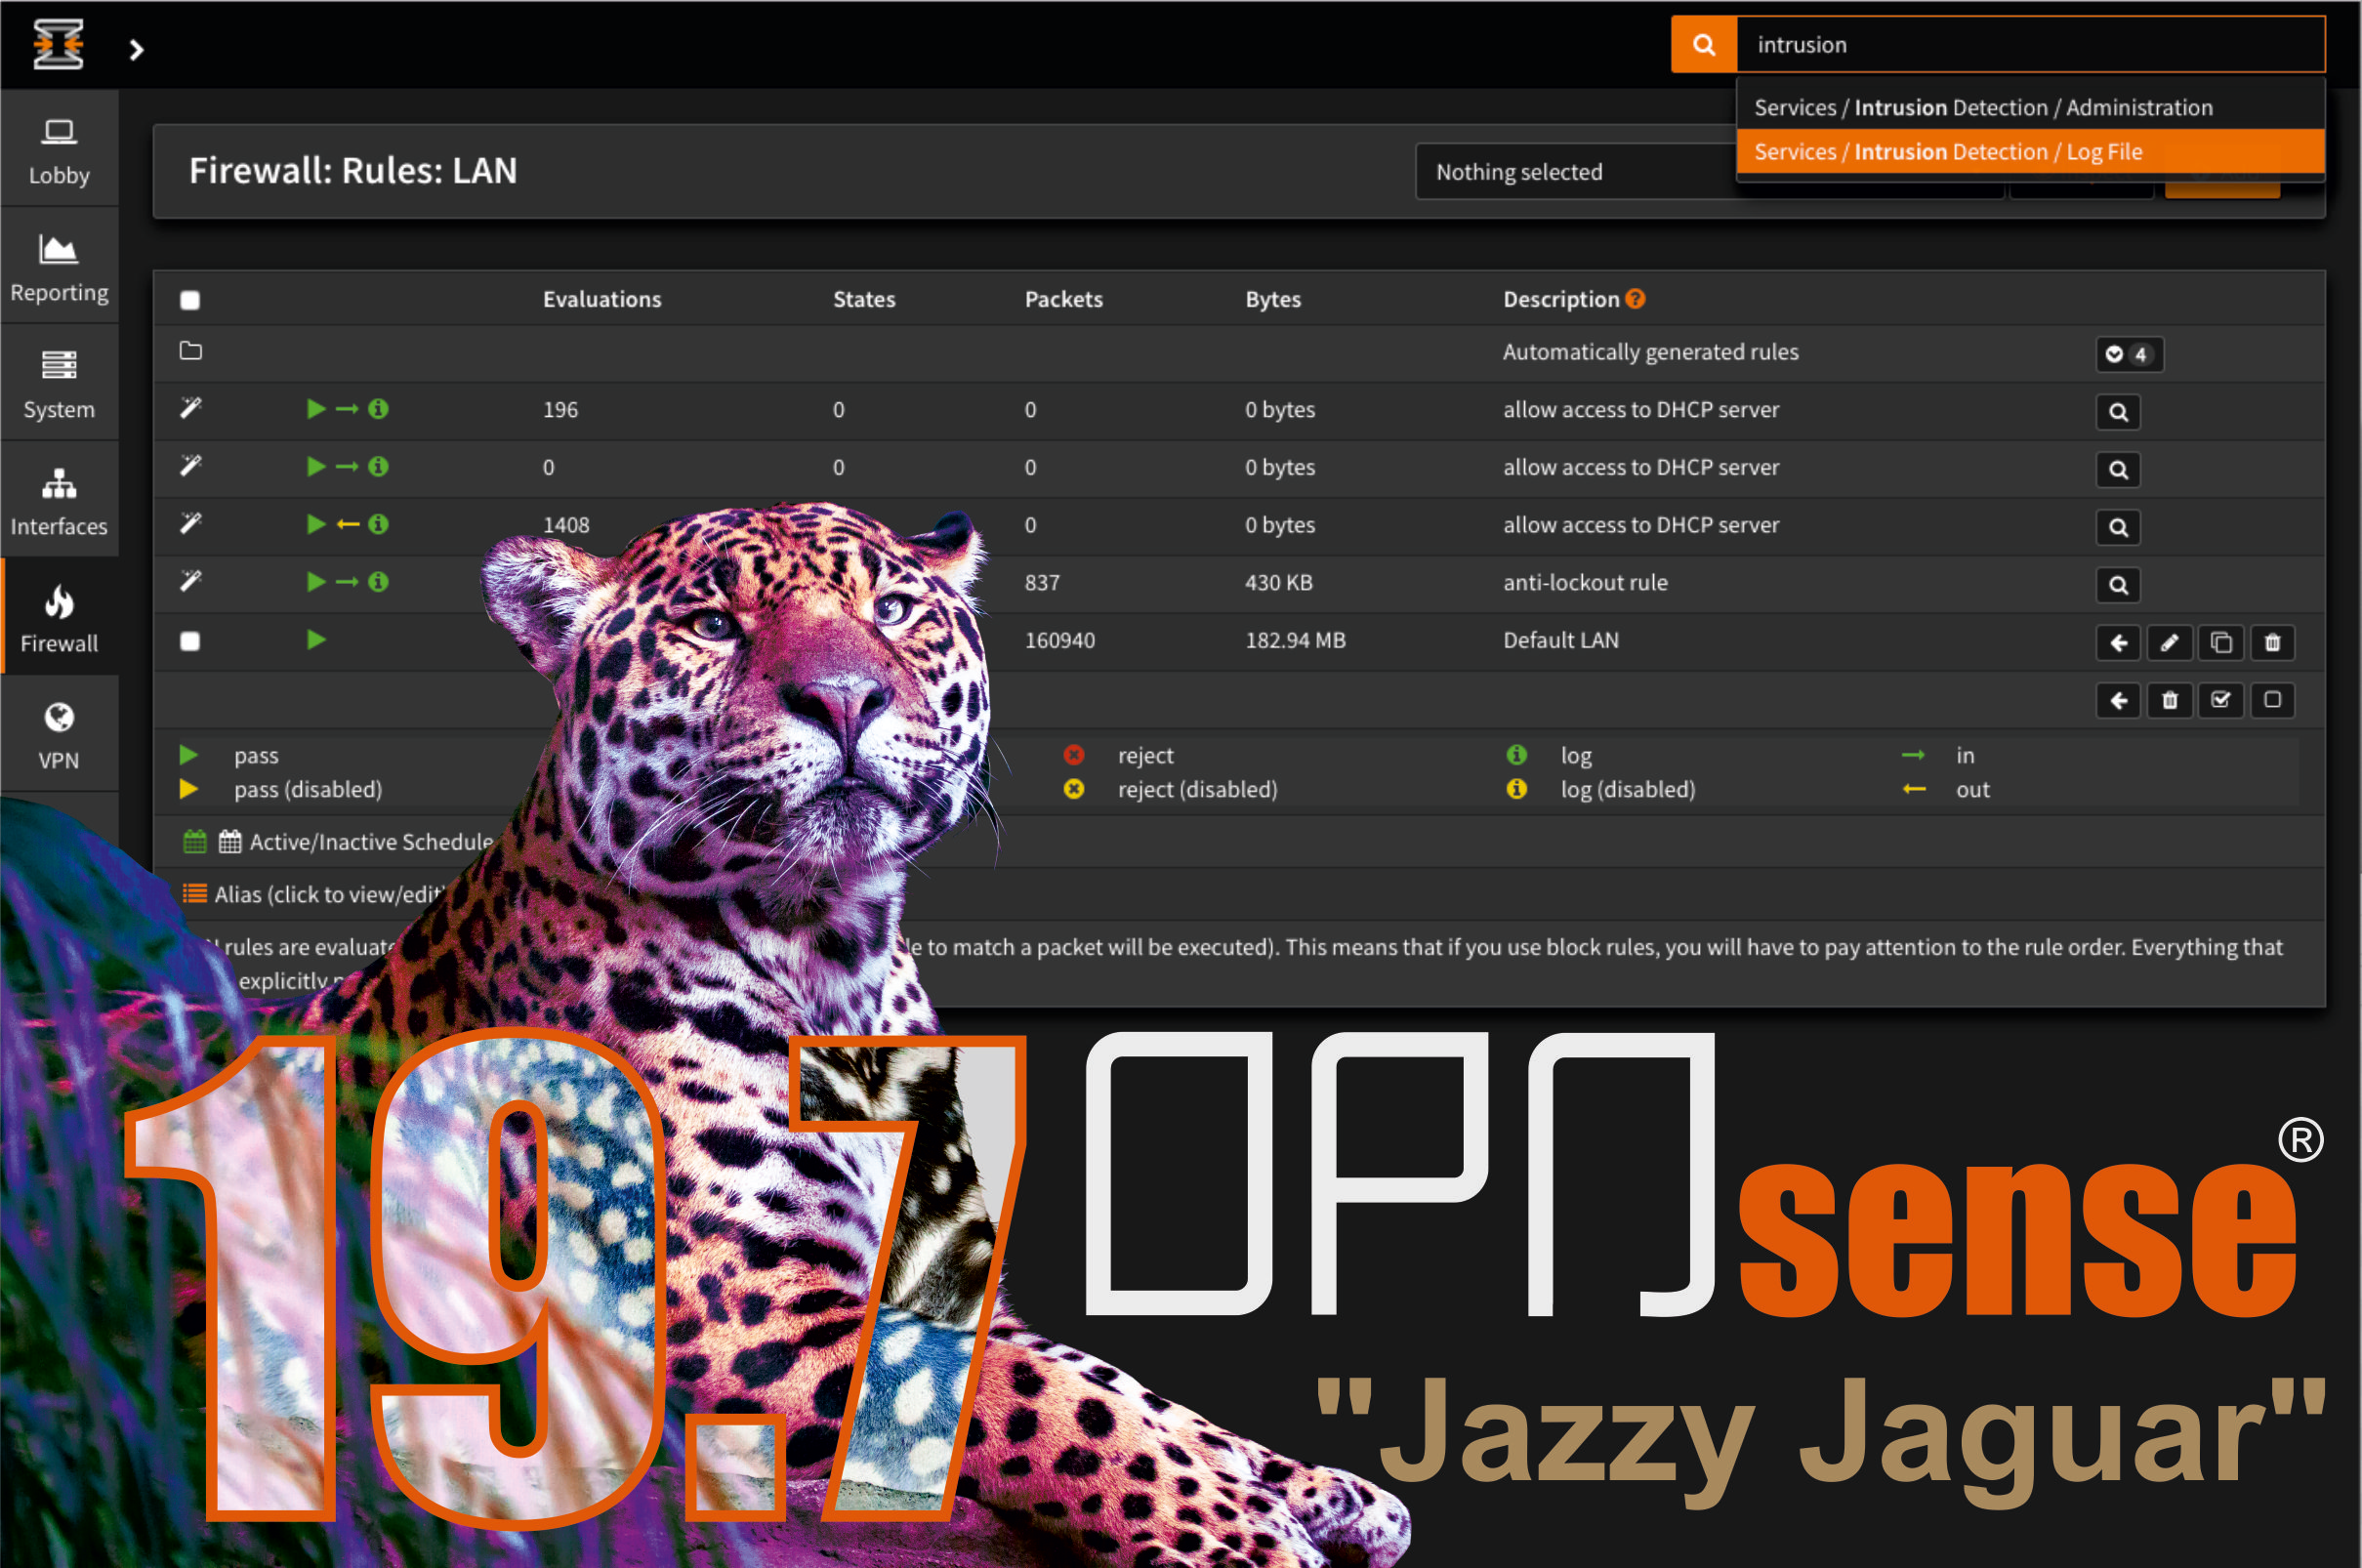 OPNsense 19.7 "Jazzy Jaguar" released